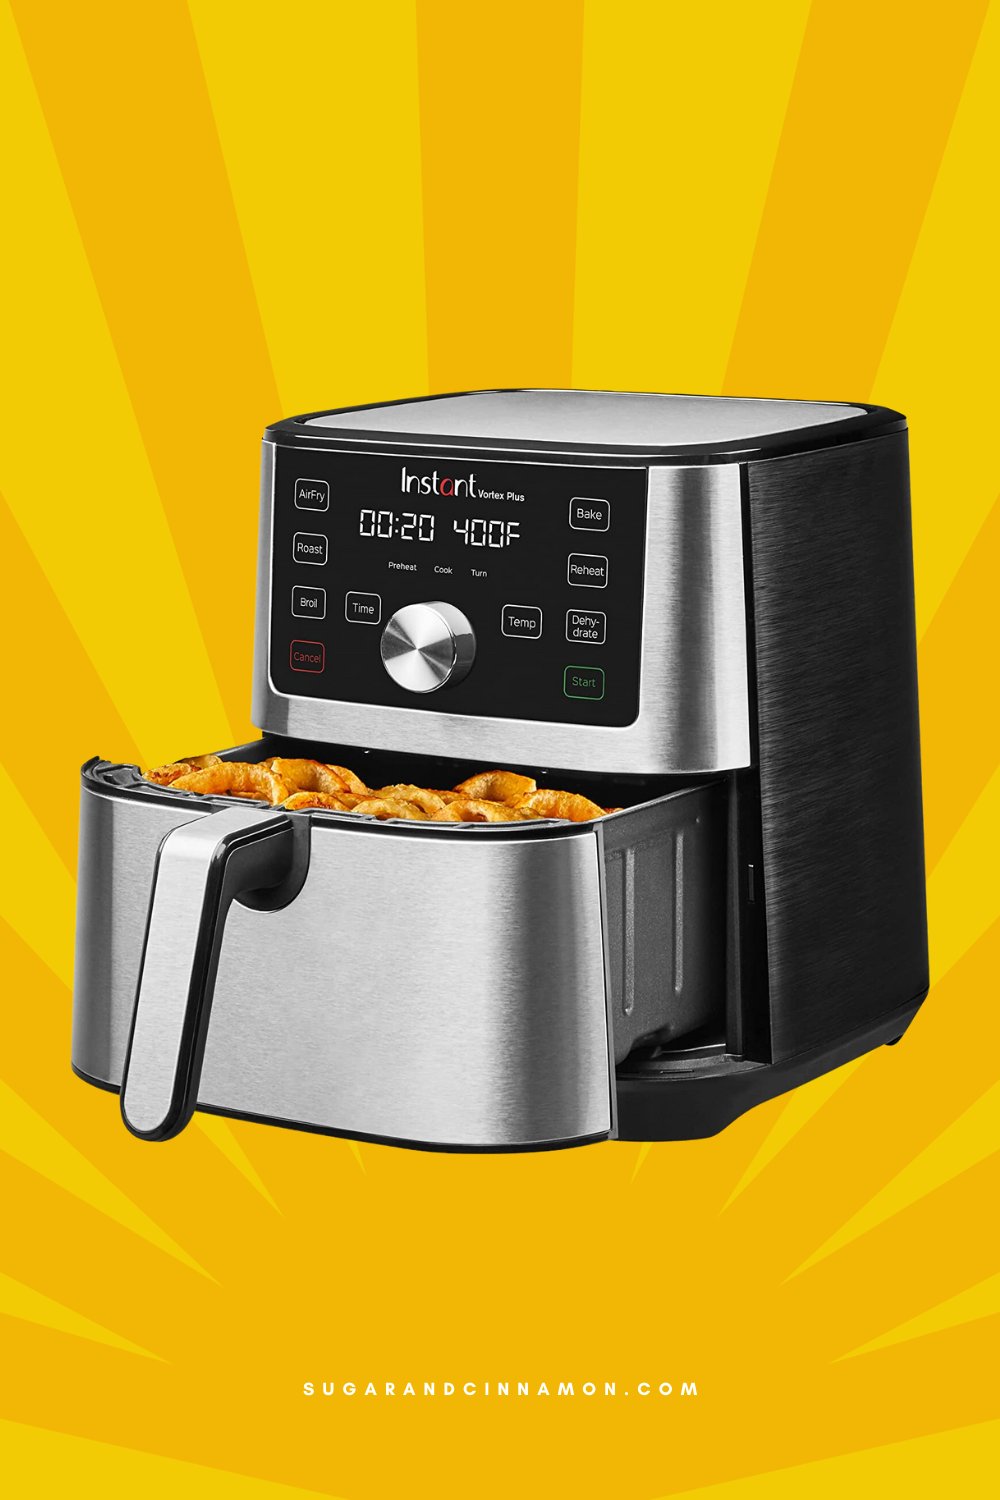 Instant Pot Vortex Plus 6-in-1 6-Quart Large Air Fryer Oven